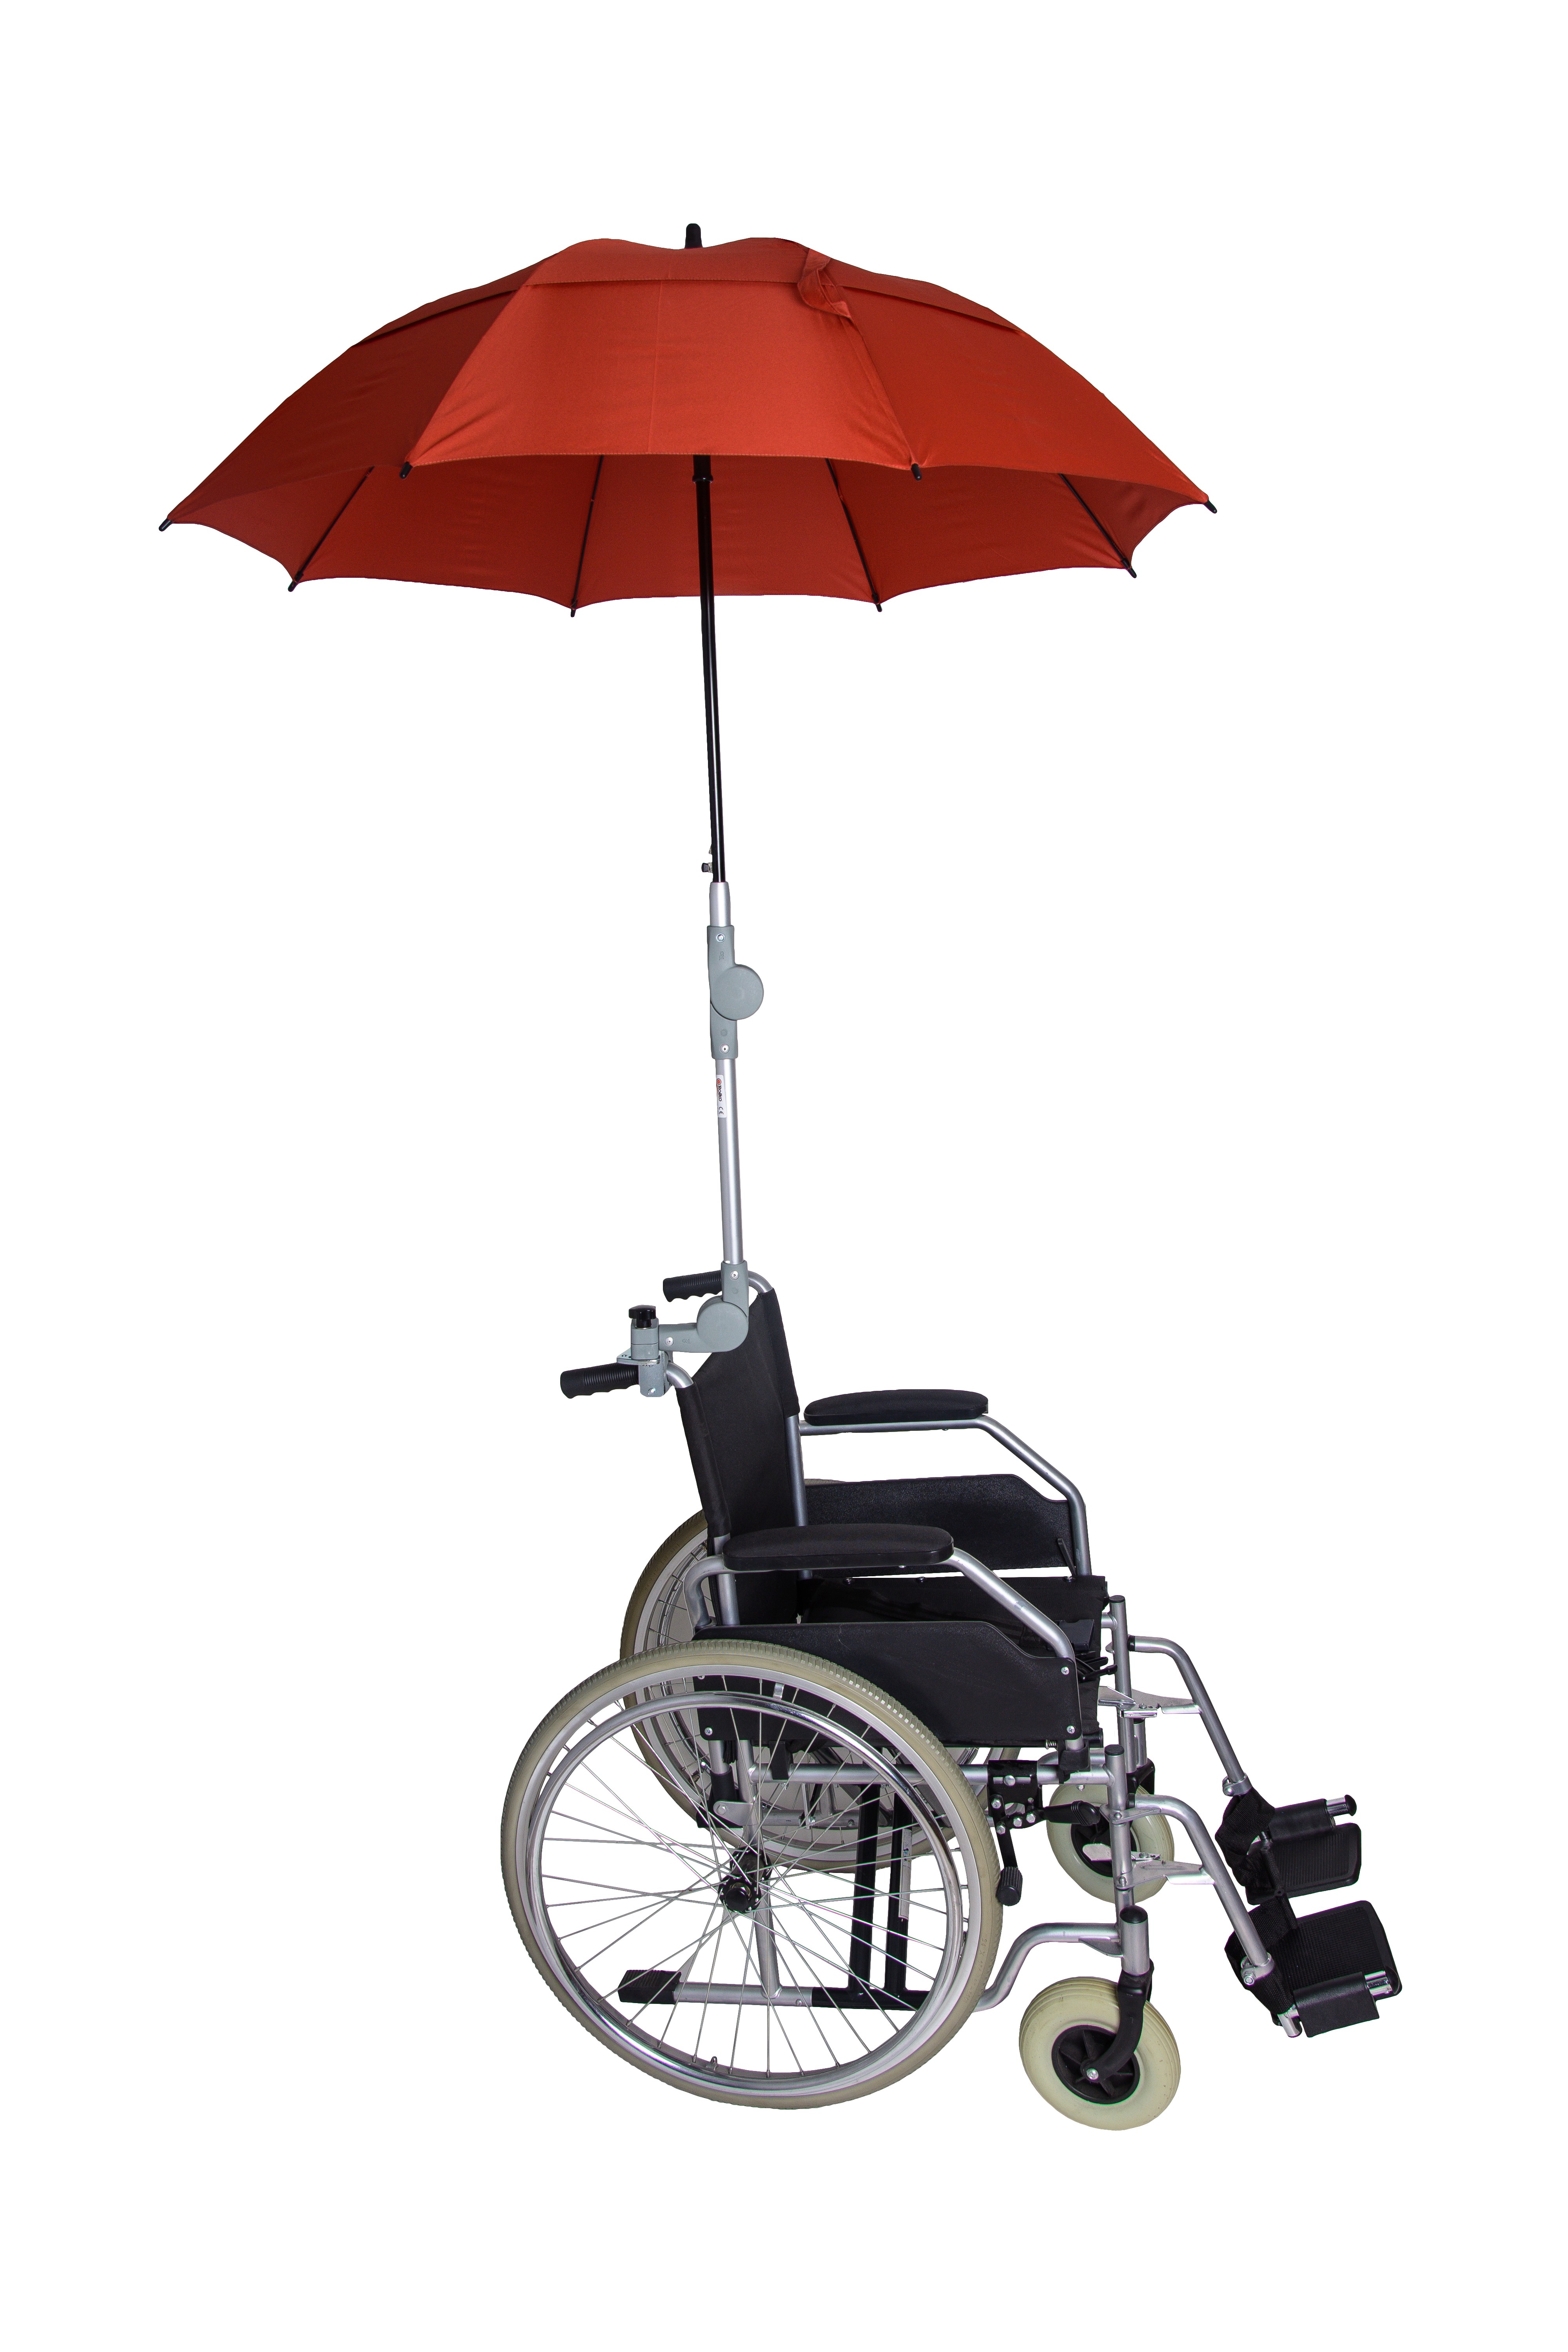 Pflegehome24 Befestigung Regenschirm Sonnenschirm ROT/BRAUN Rollatorschirm inkl. -